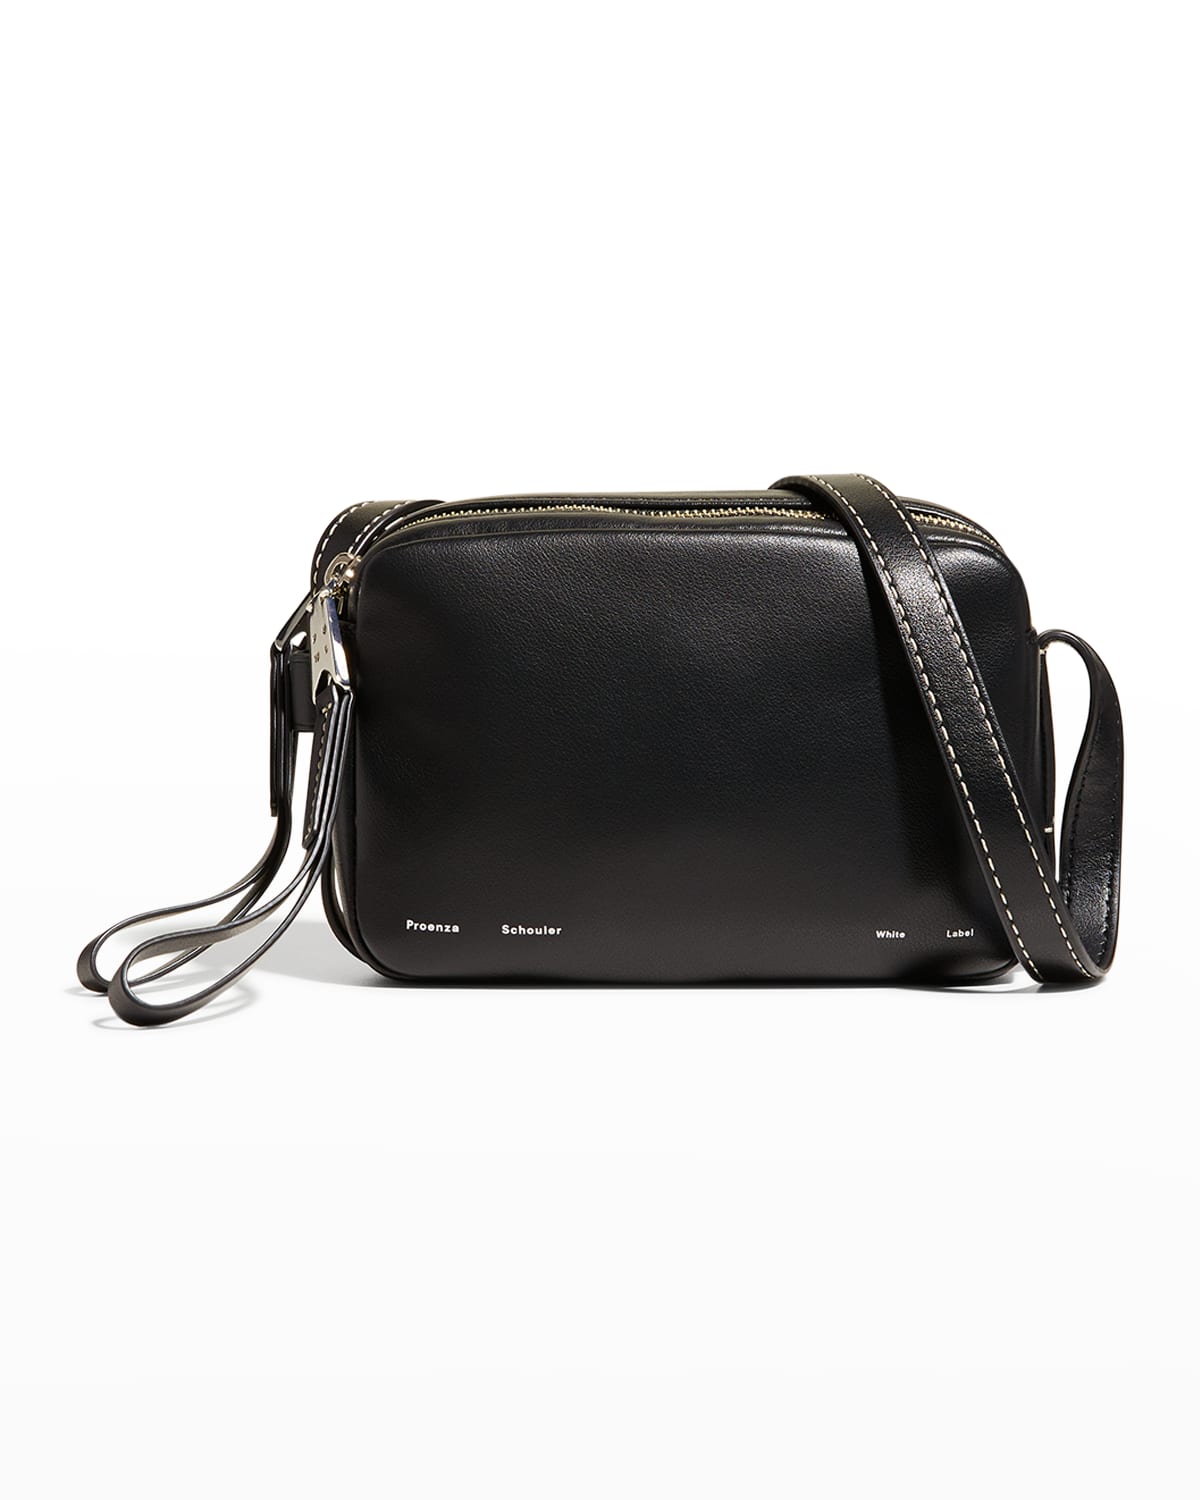 Proenza Schouler White Label Watts Leather Camera Shoulder Bag In Black